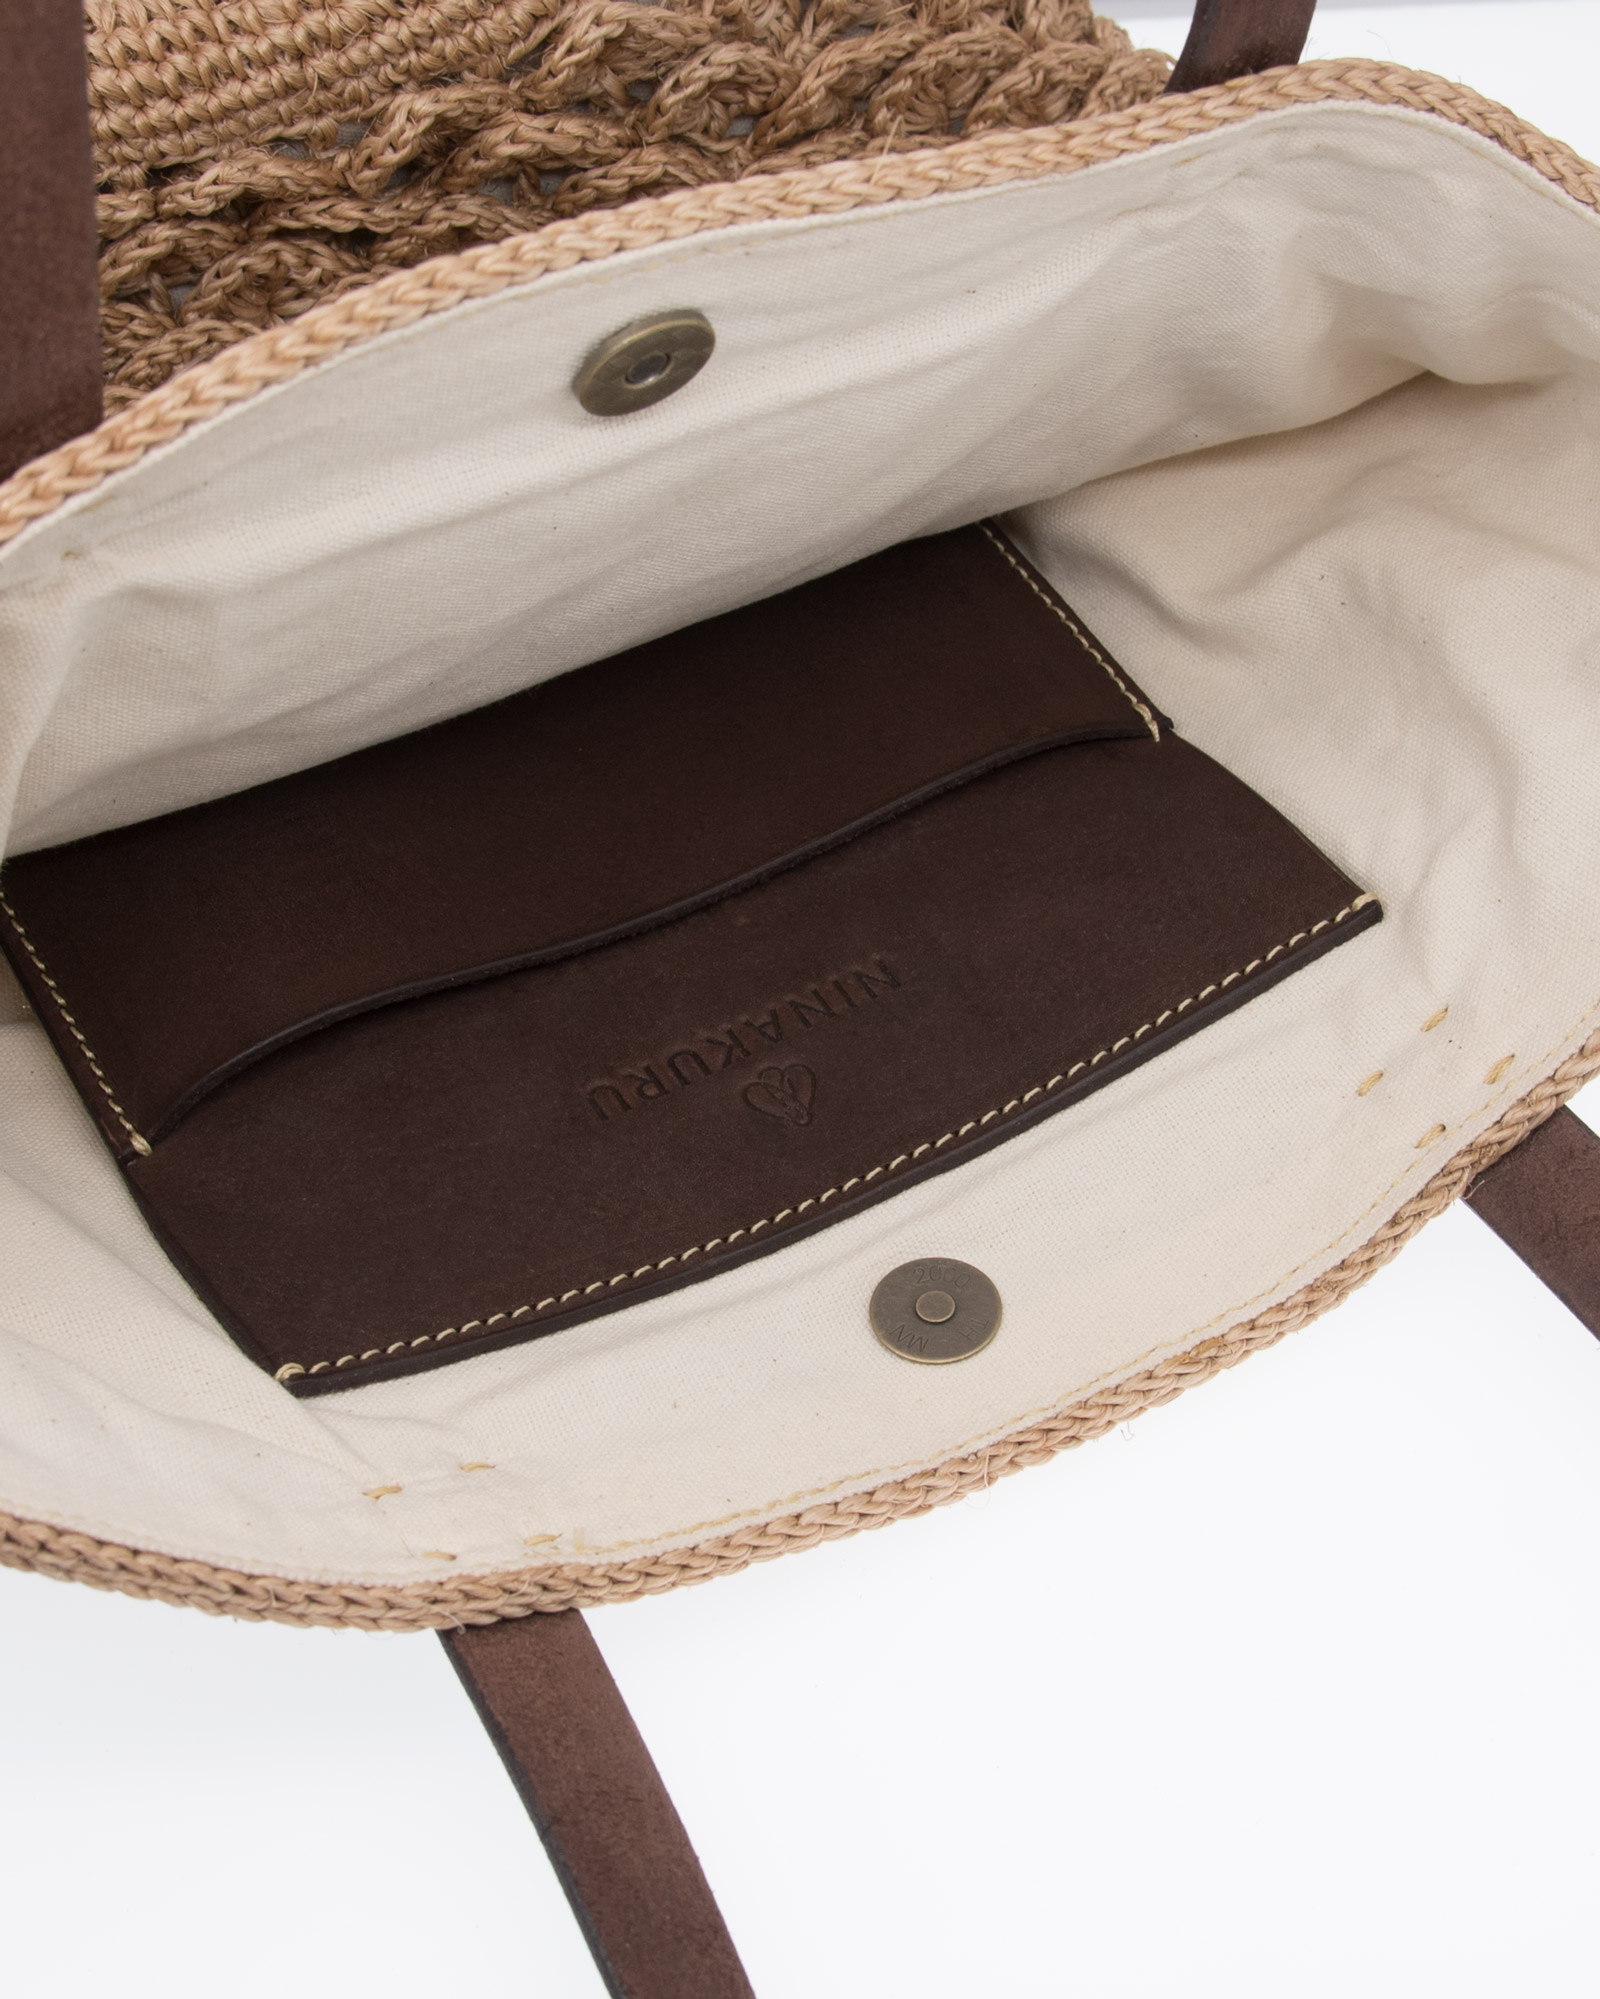 https://ninakuru.com/wp-content/uploads/2021/06/Ninakuru-2200sb-Agave-straw-bag-Leather-strap-Cotton-canvas-lining-leather-ocket-02.jpg